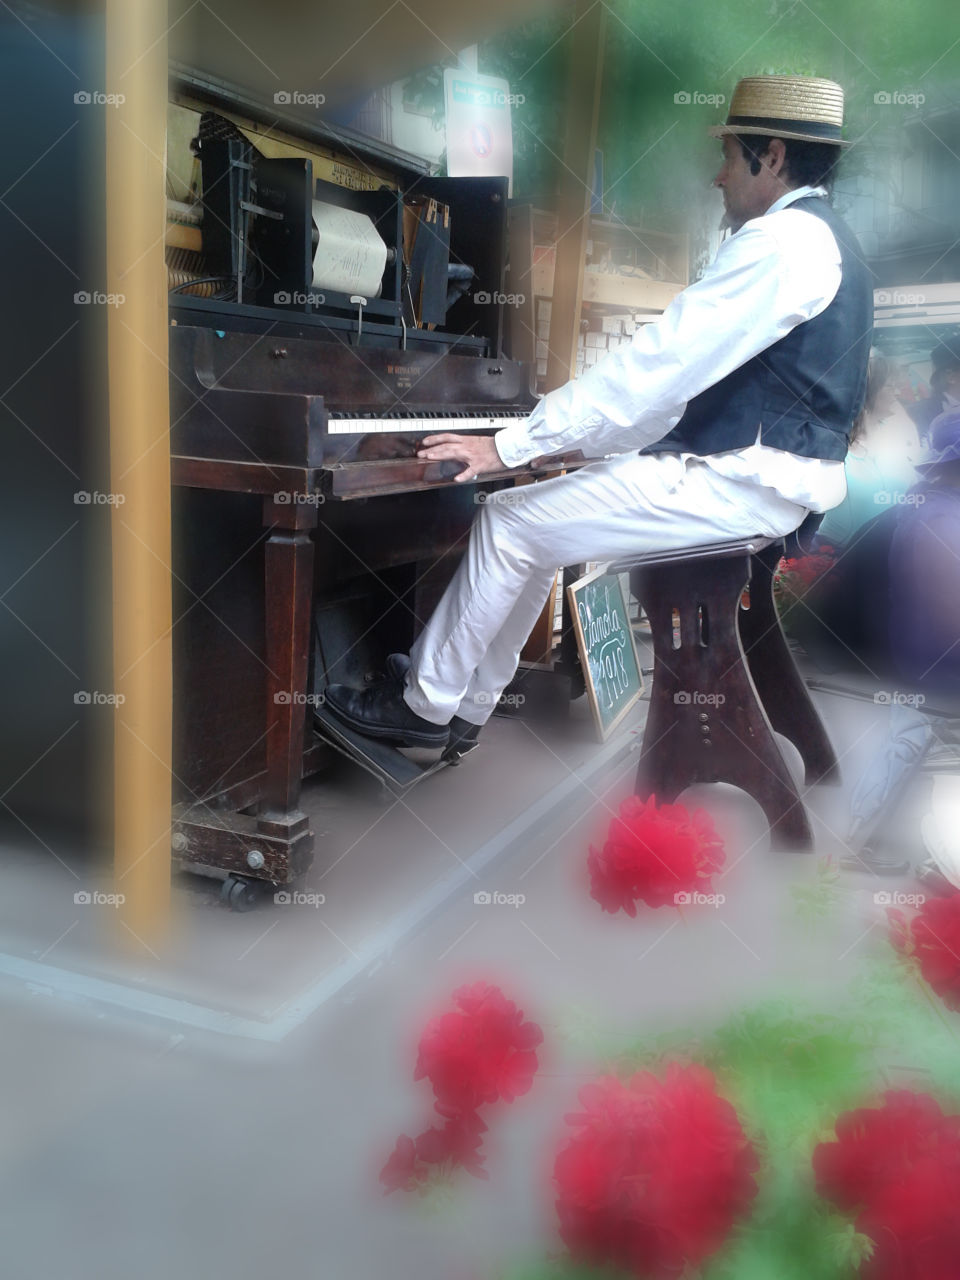 pianist